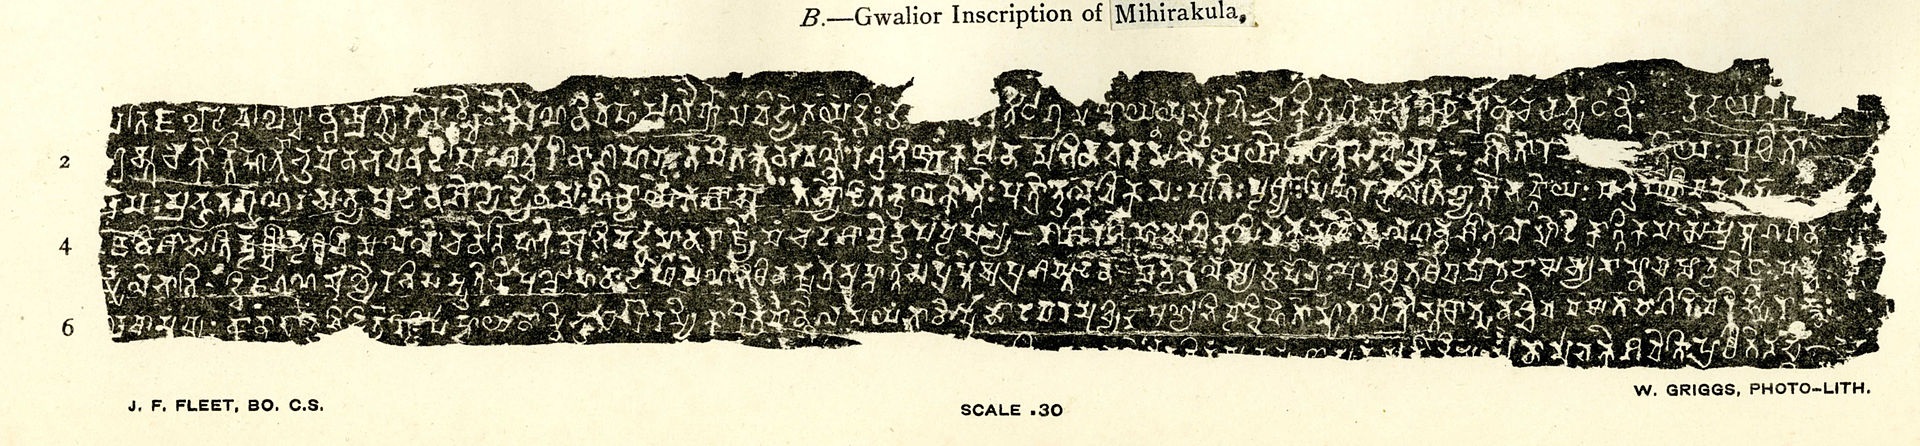 Gwalior inscription of Mihirakula